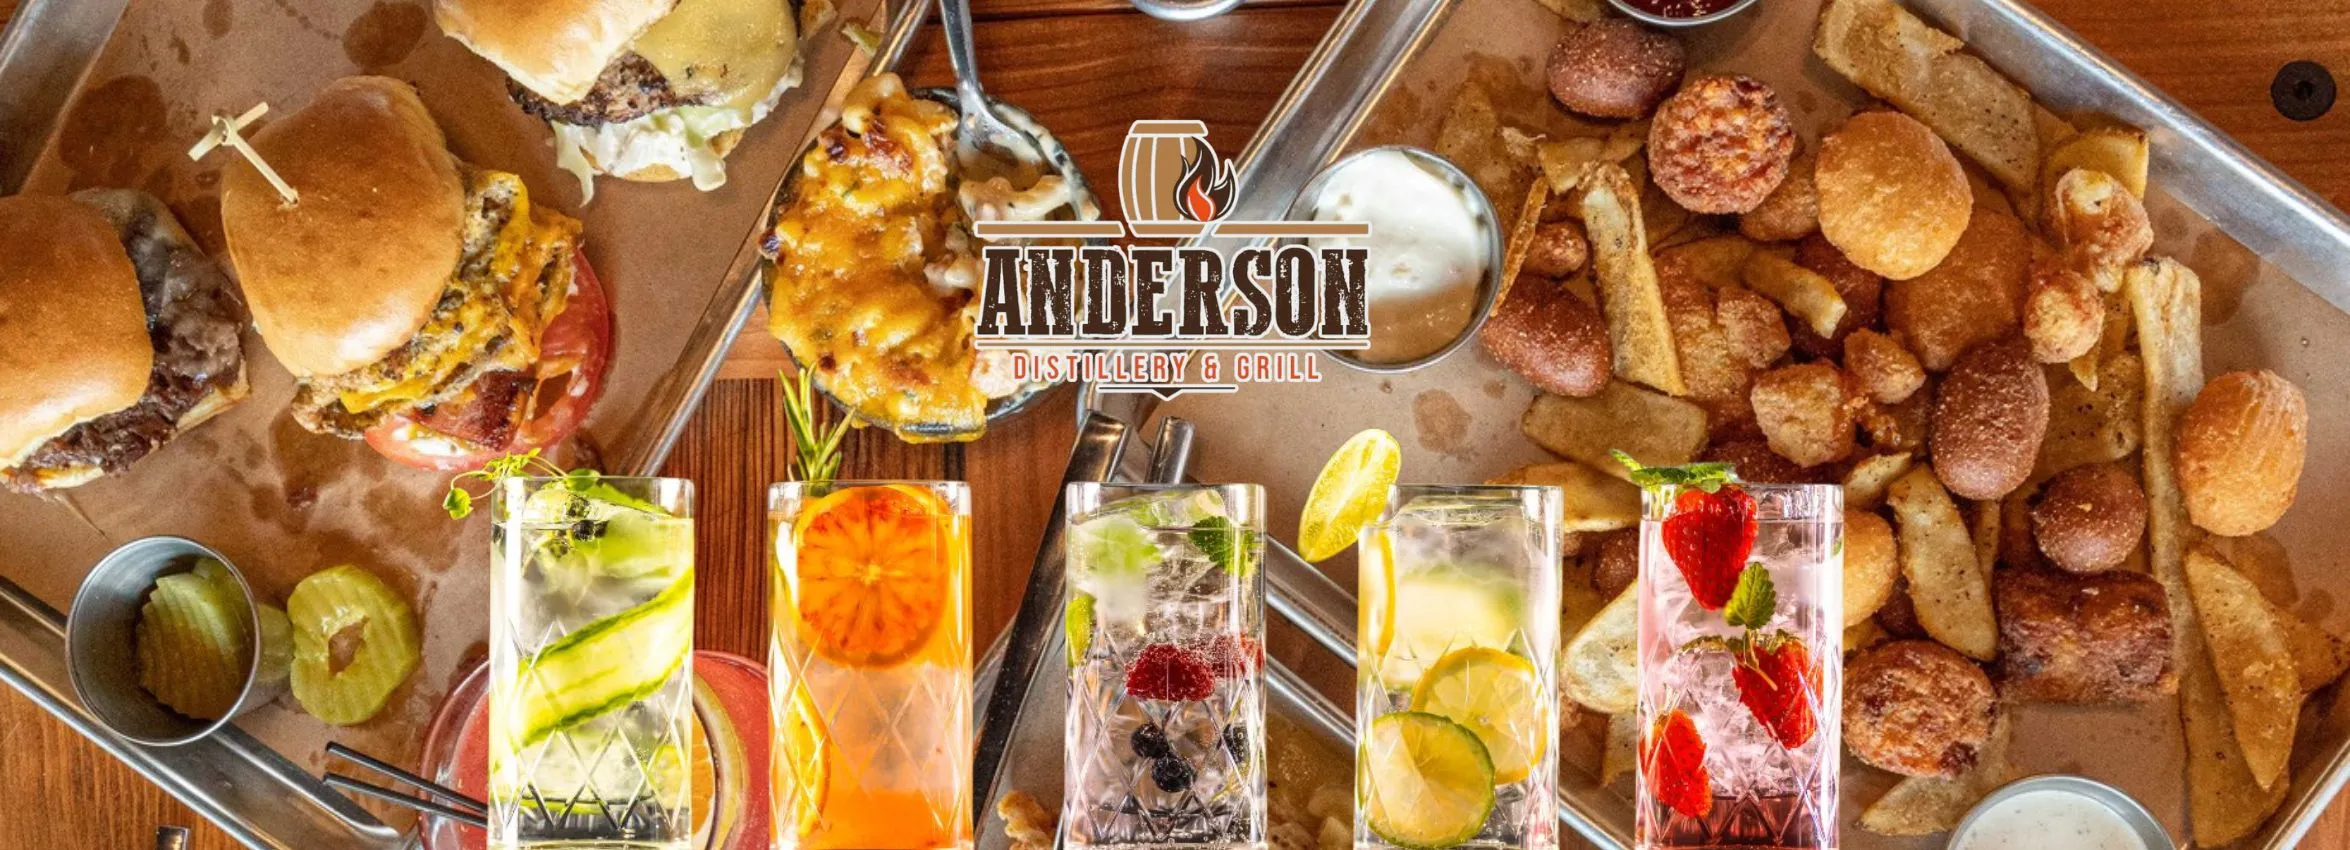 Anderson-Distillery-_-Grill_Desktop_ET-